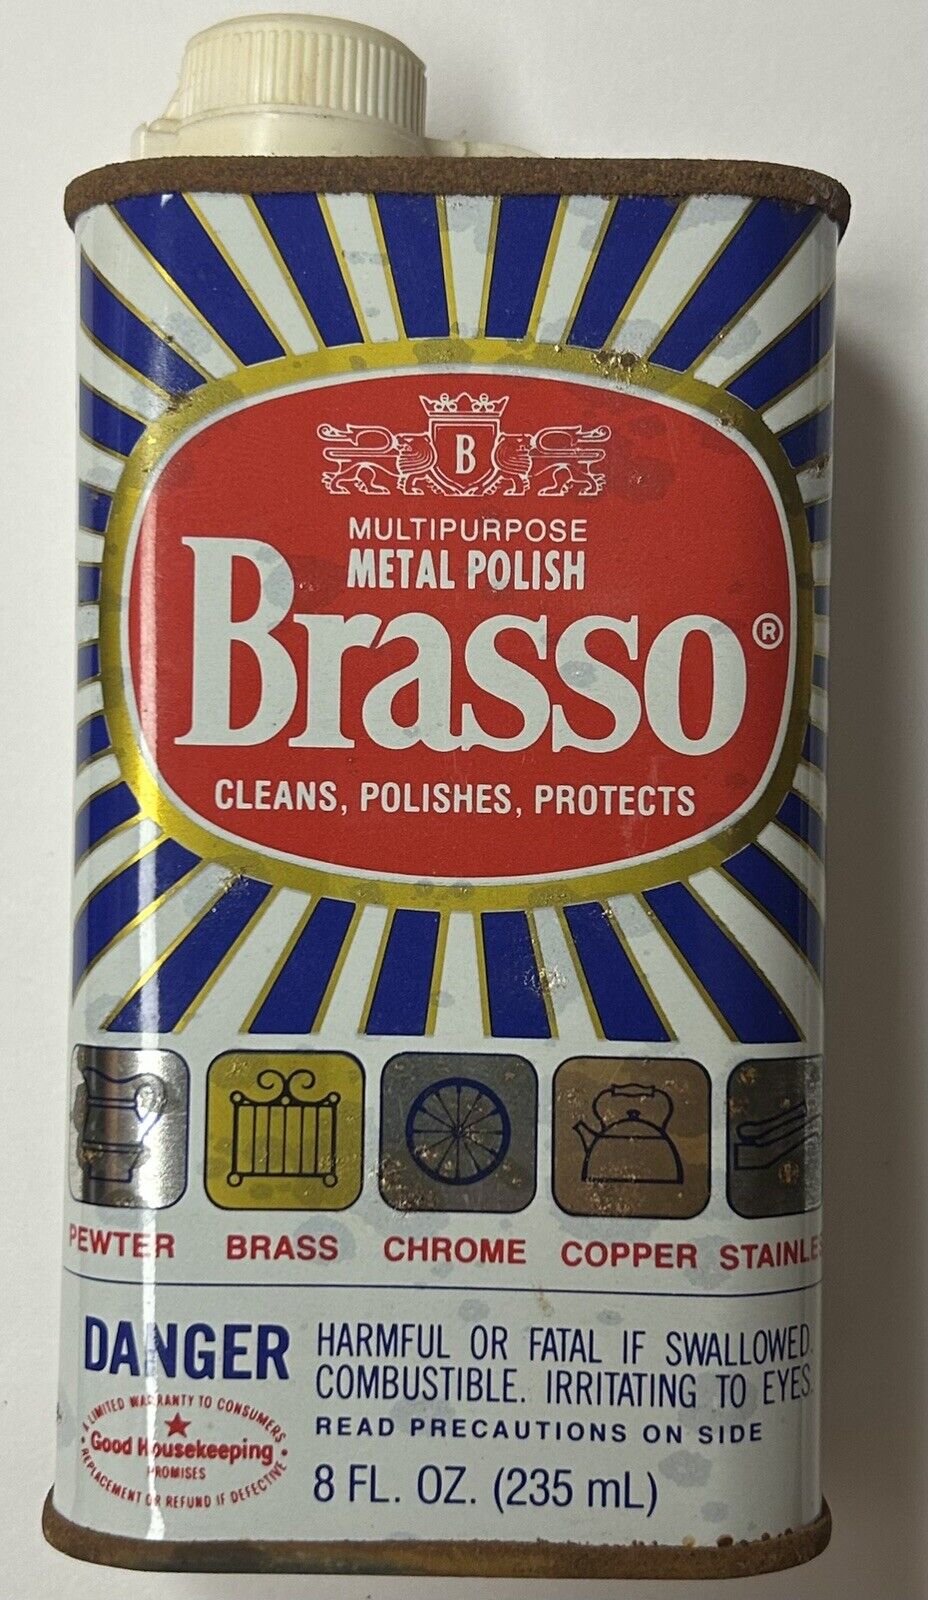 Brasso Metal Polish Decorative Tin, Collectible Home Goods